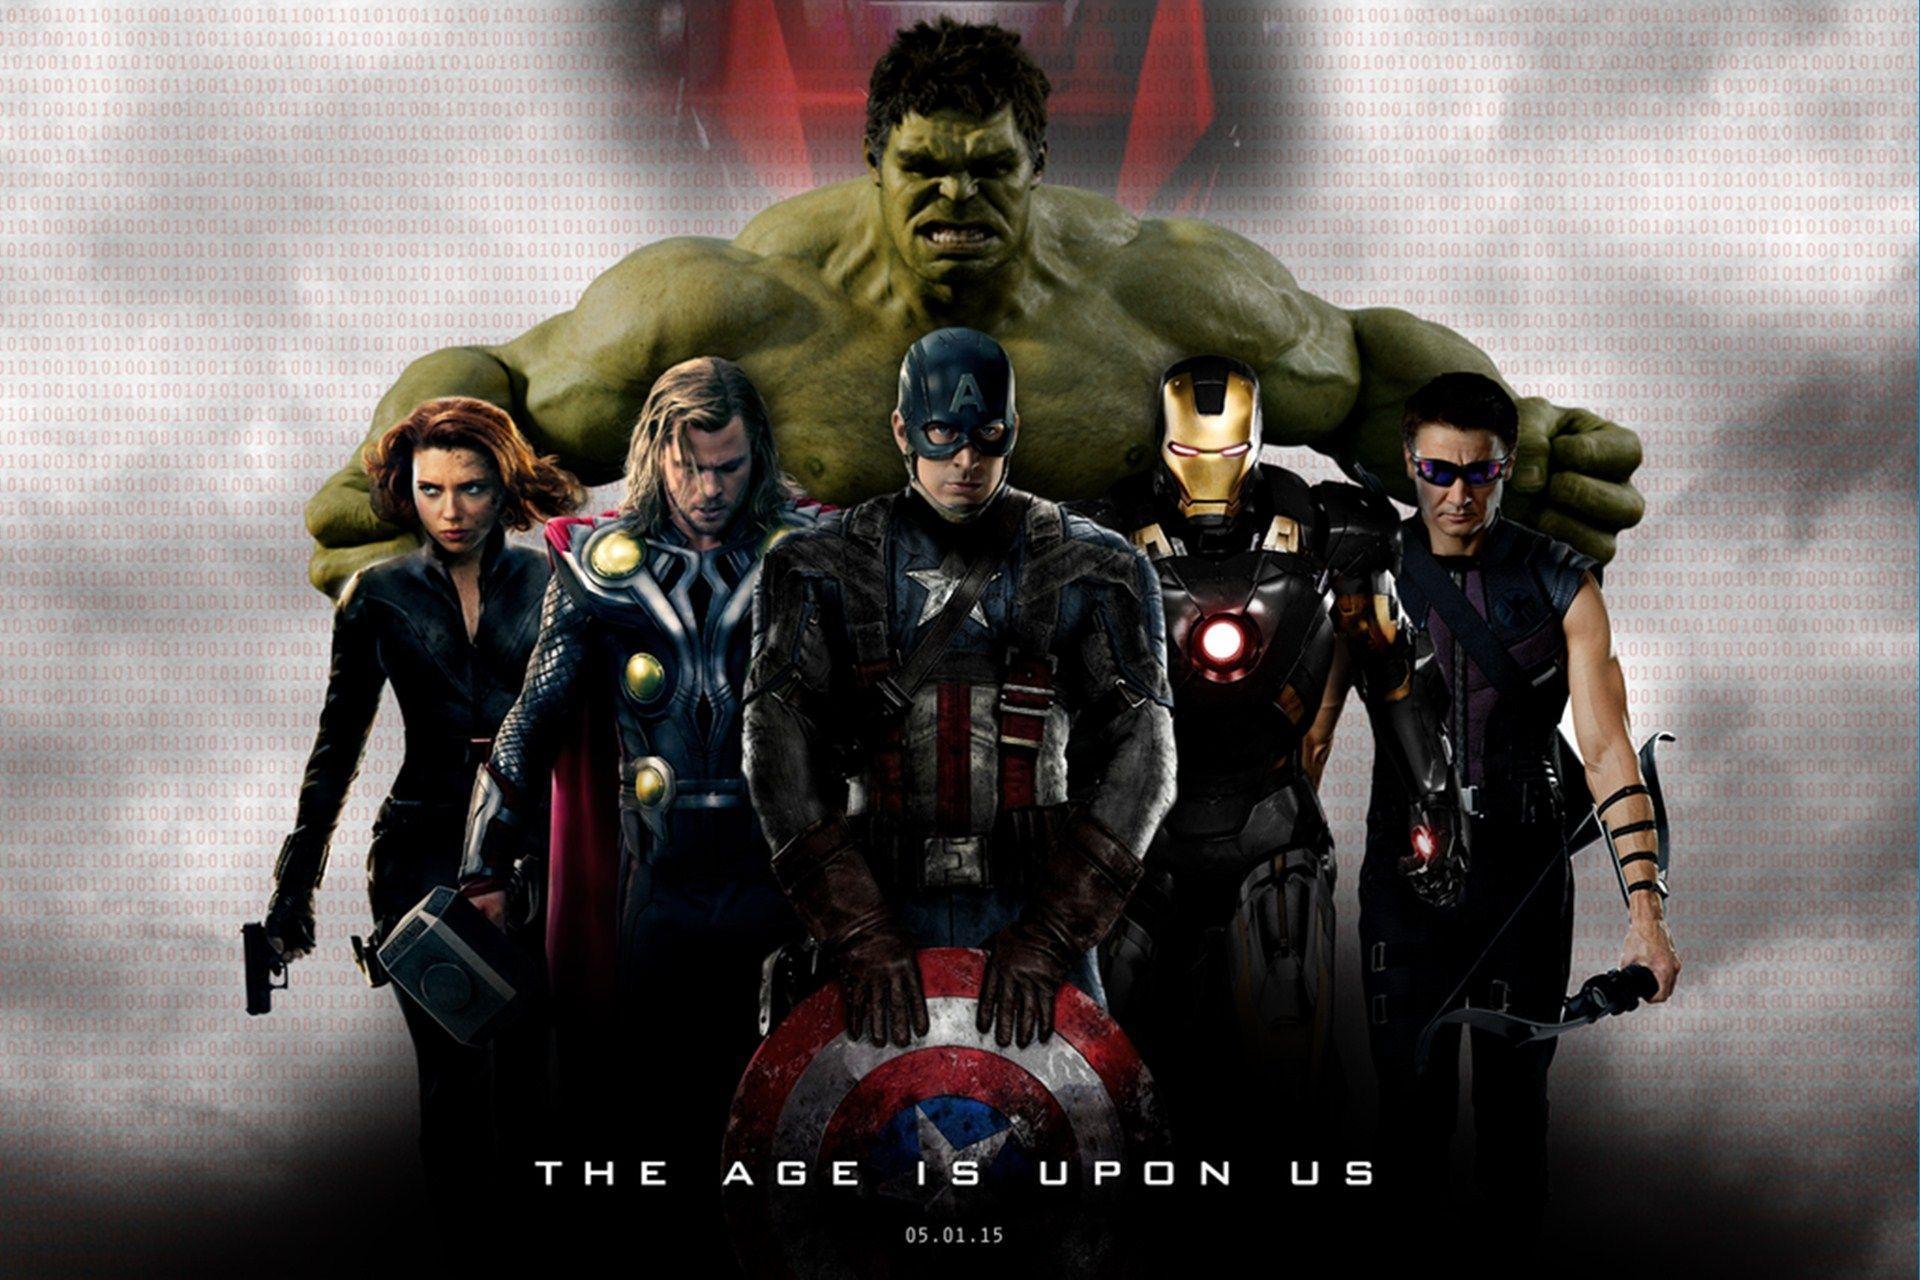 Download HD Wallpaper Of Avengers